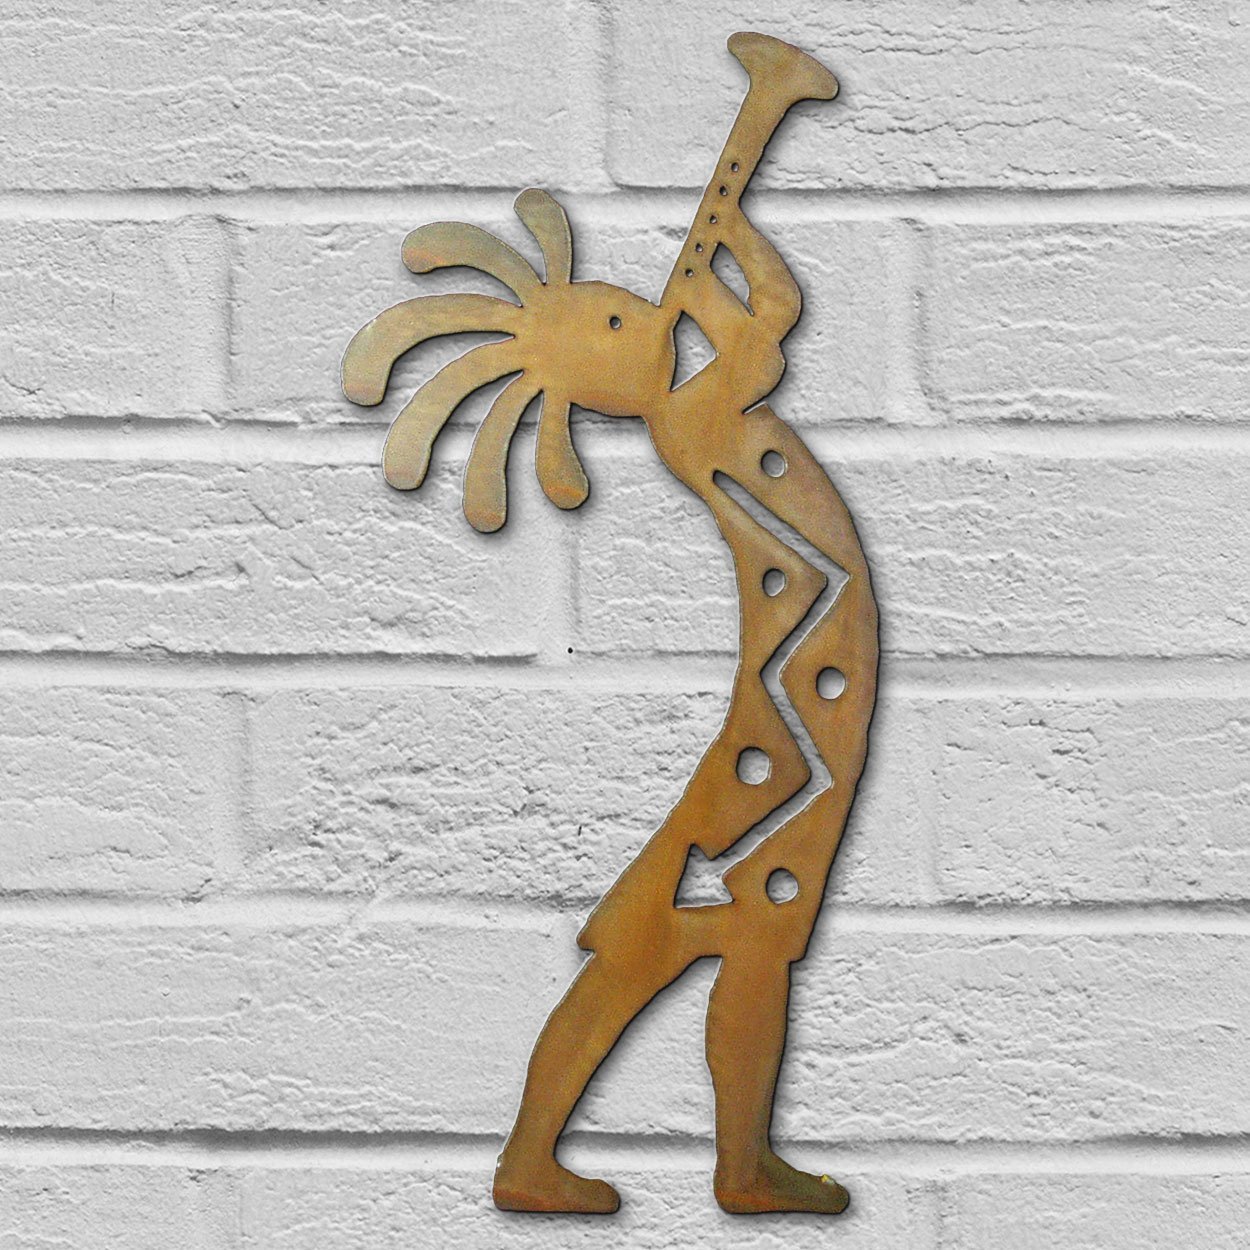 165201 - 12in Trumpeting Kokopelli Right 3D Southwest Metal Wall Art in Rust